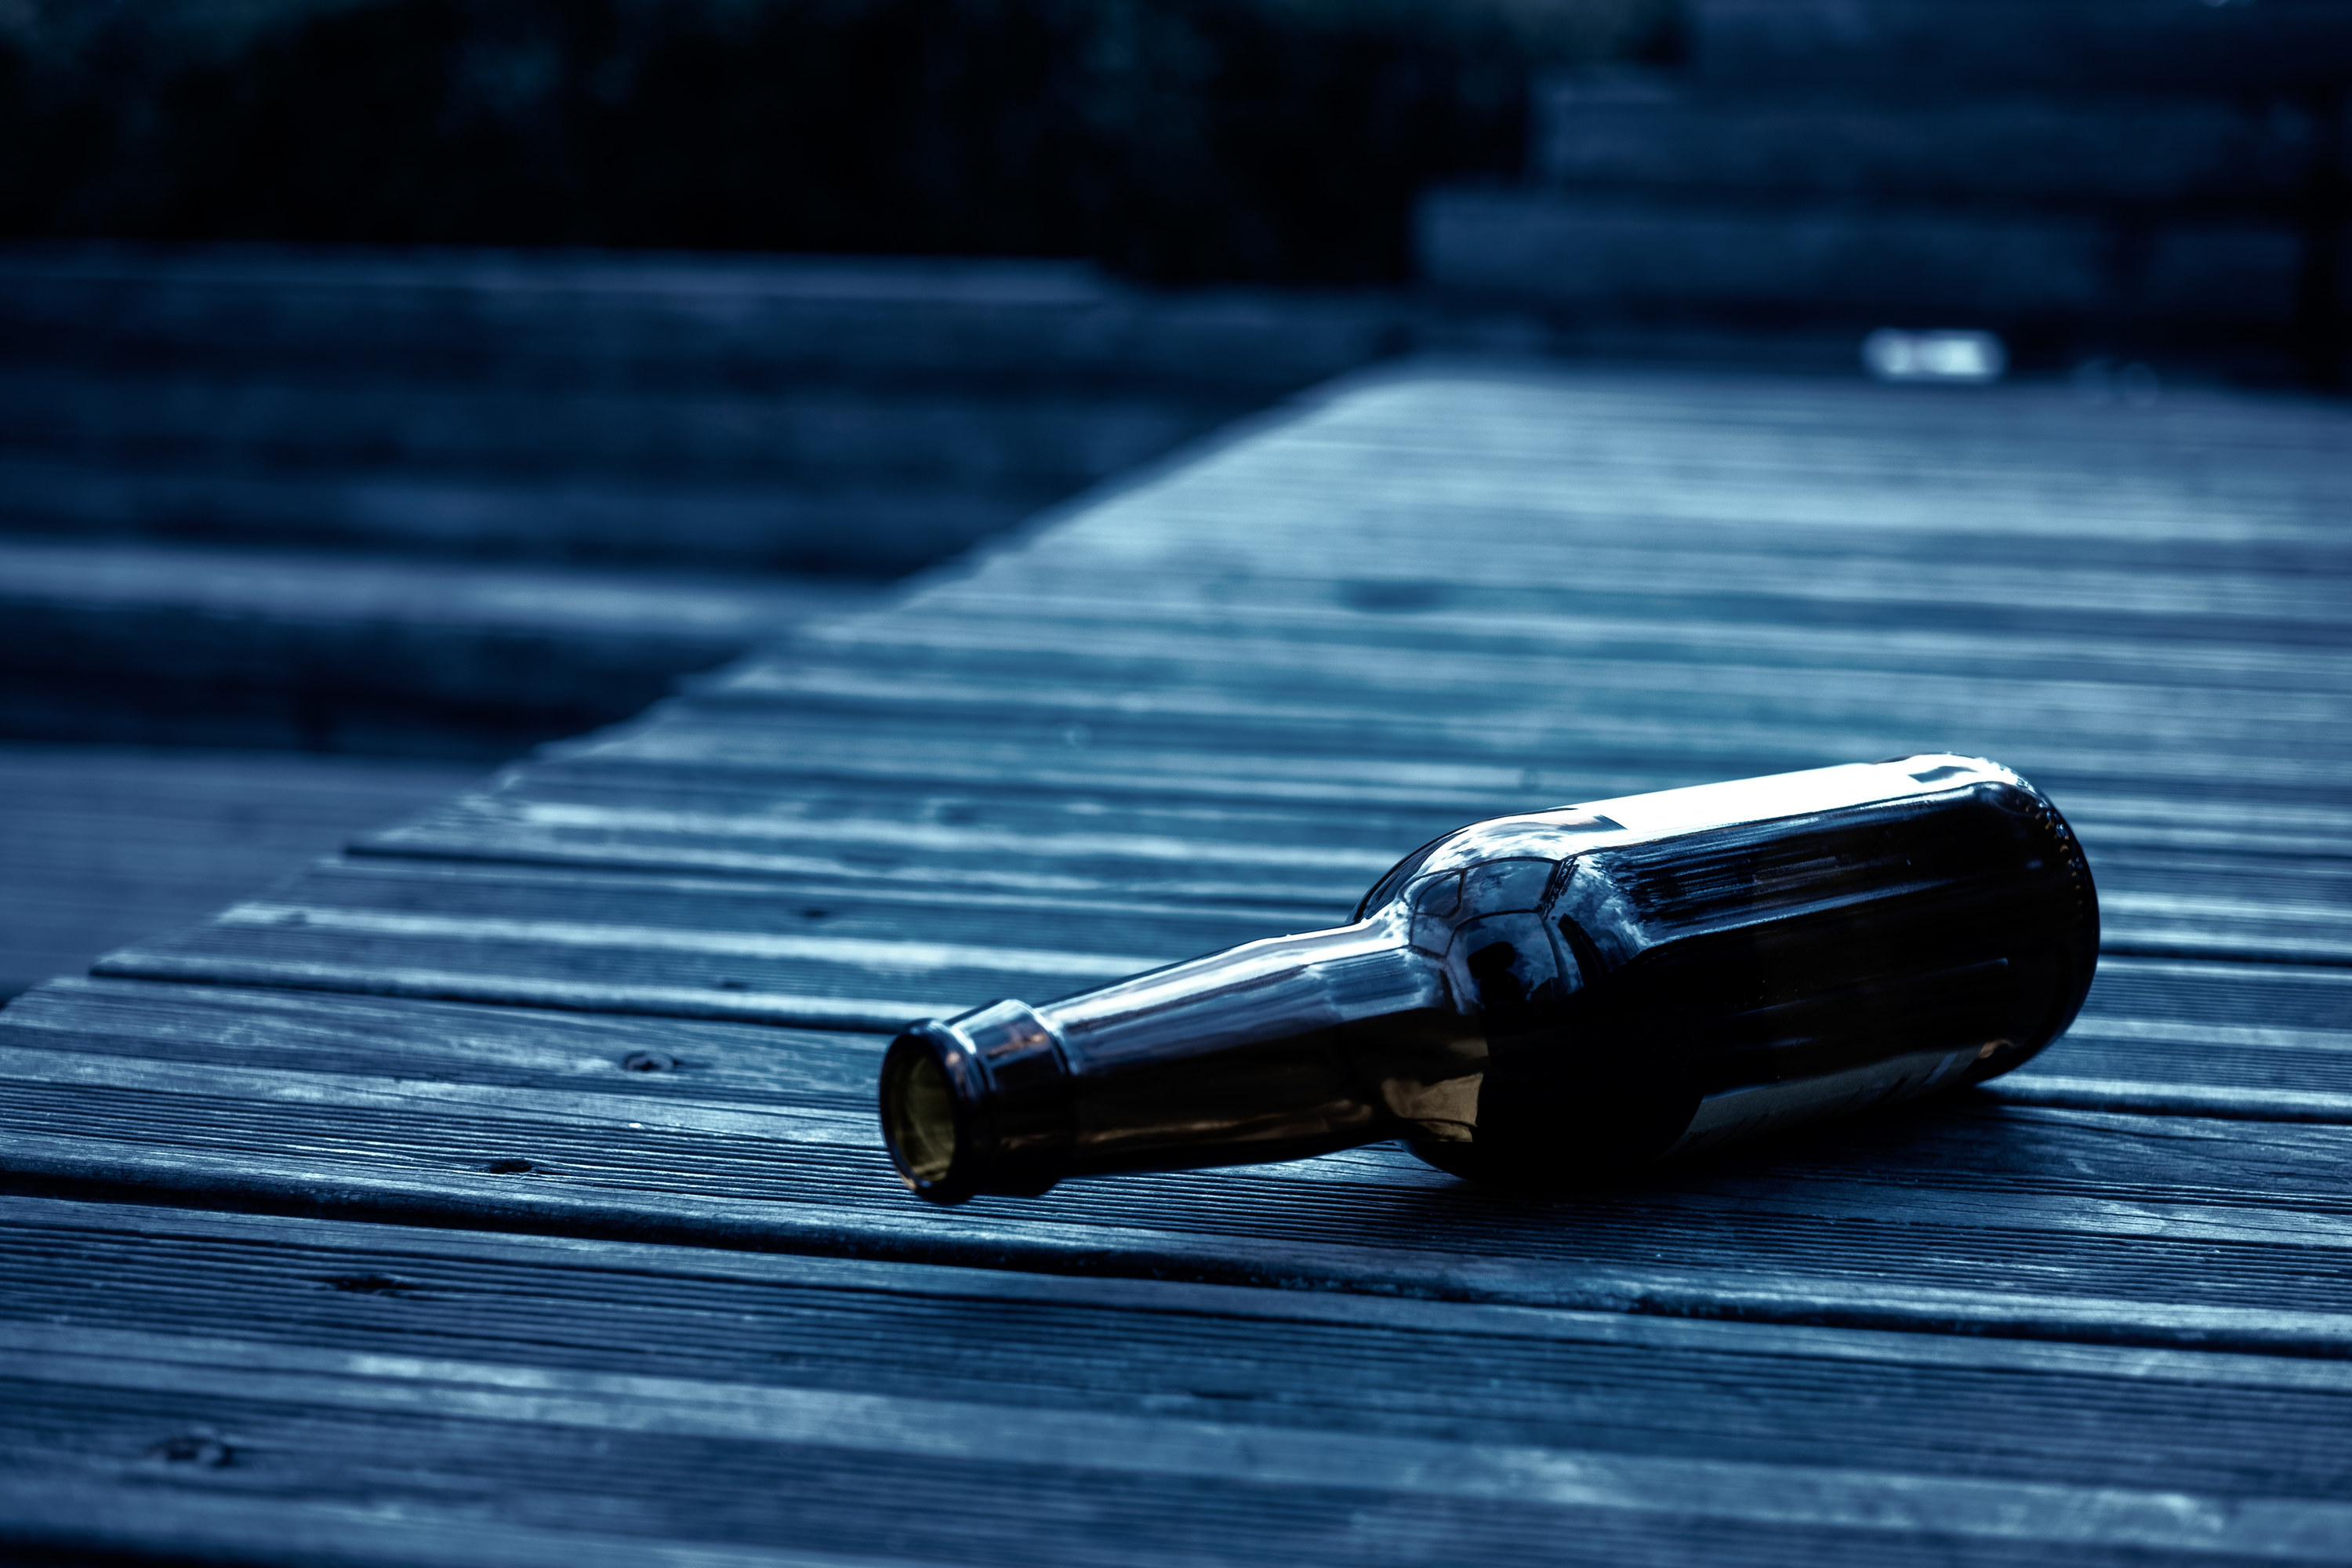 empty bottle on a deck floor